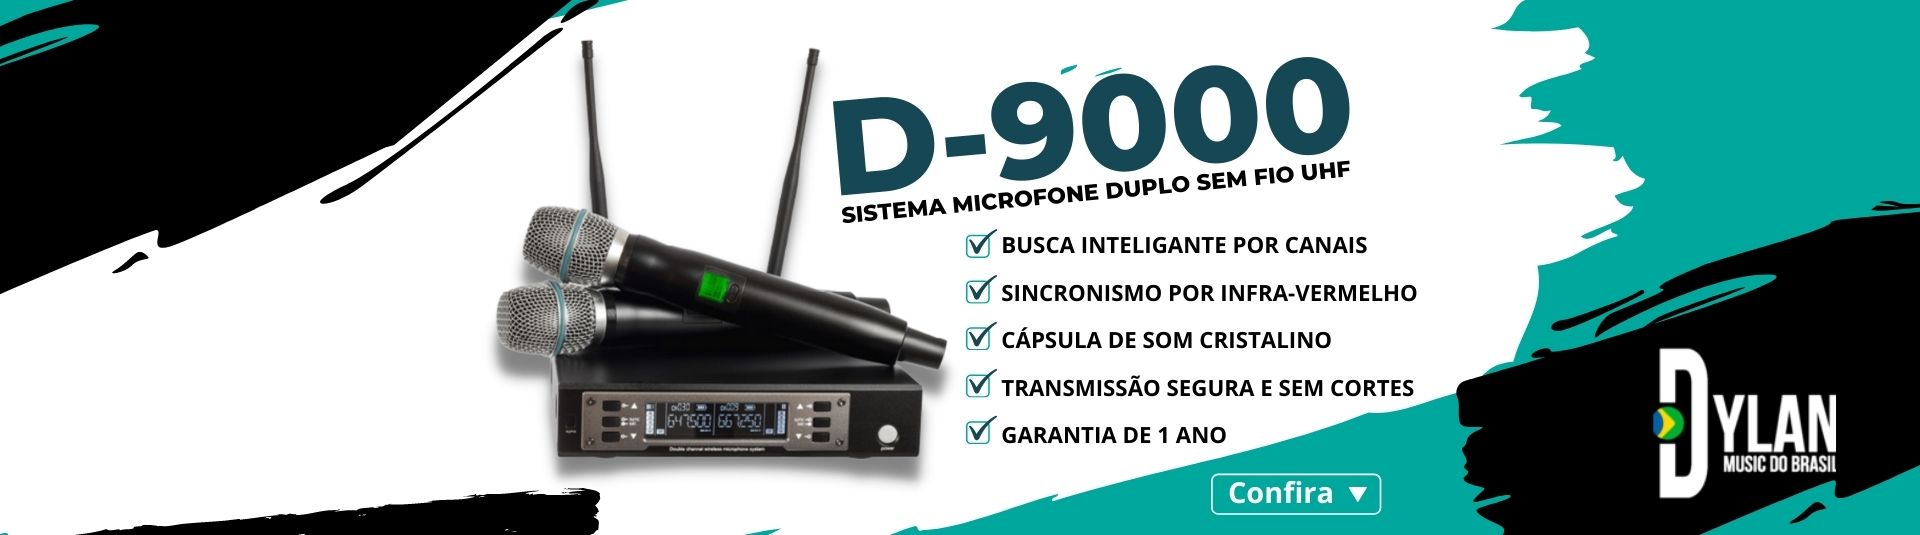 Dylan D-9000